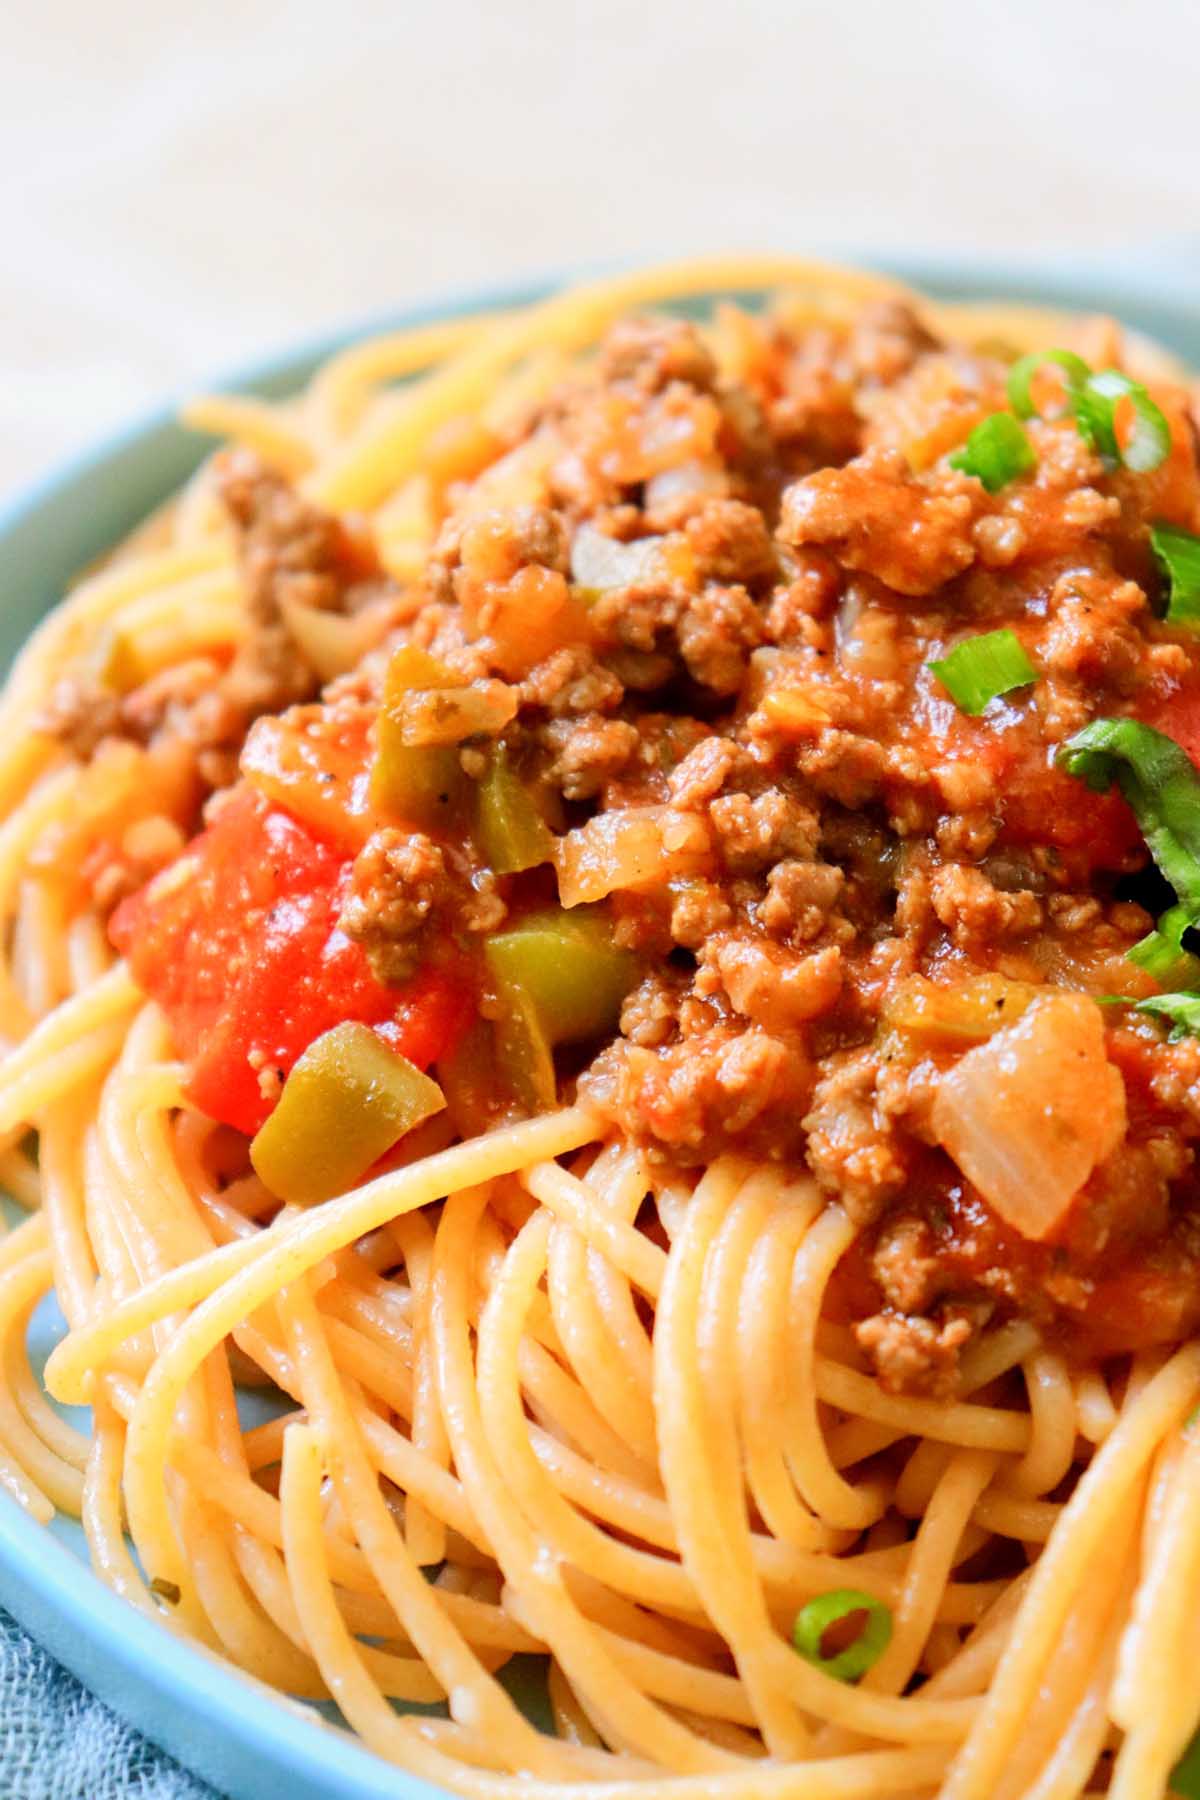 Spaghetti sauce on a plate.